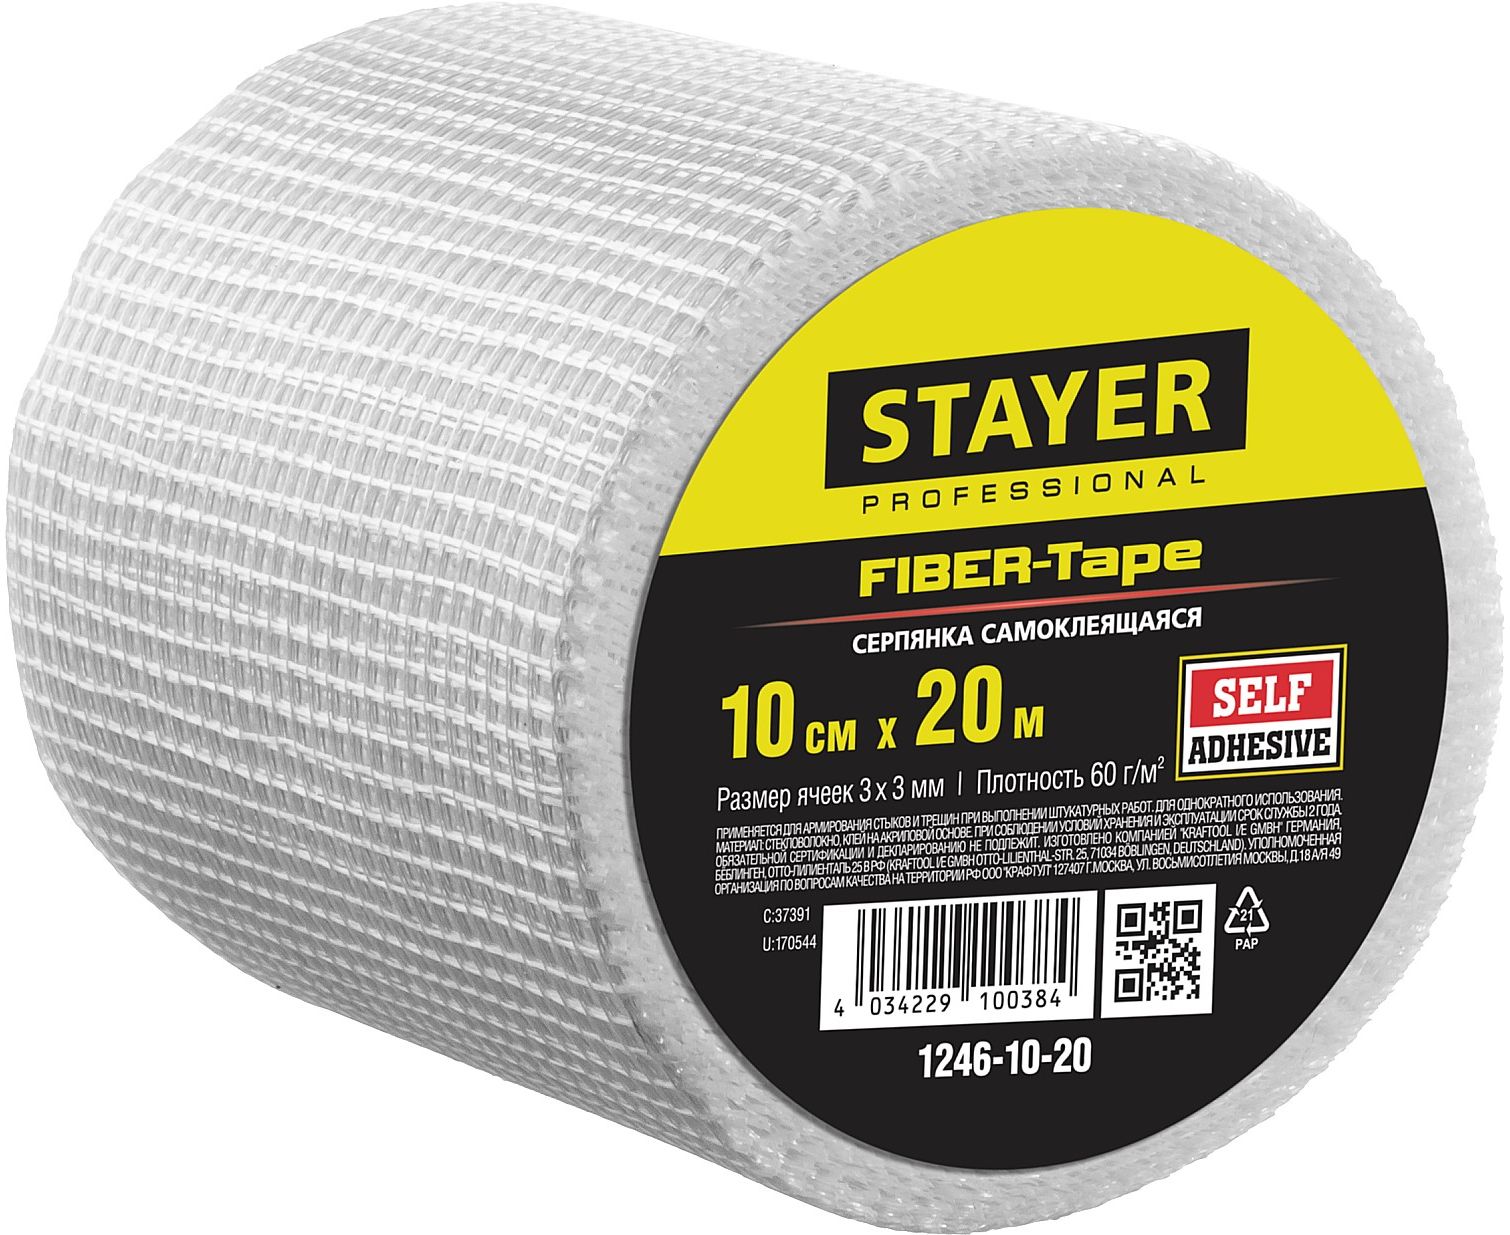 Серпянка самоклеящаяся STAYER Professional FIBER-Tape, 10 см х 20м 1246-10-20